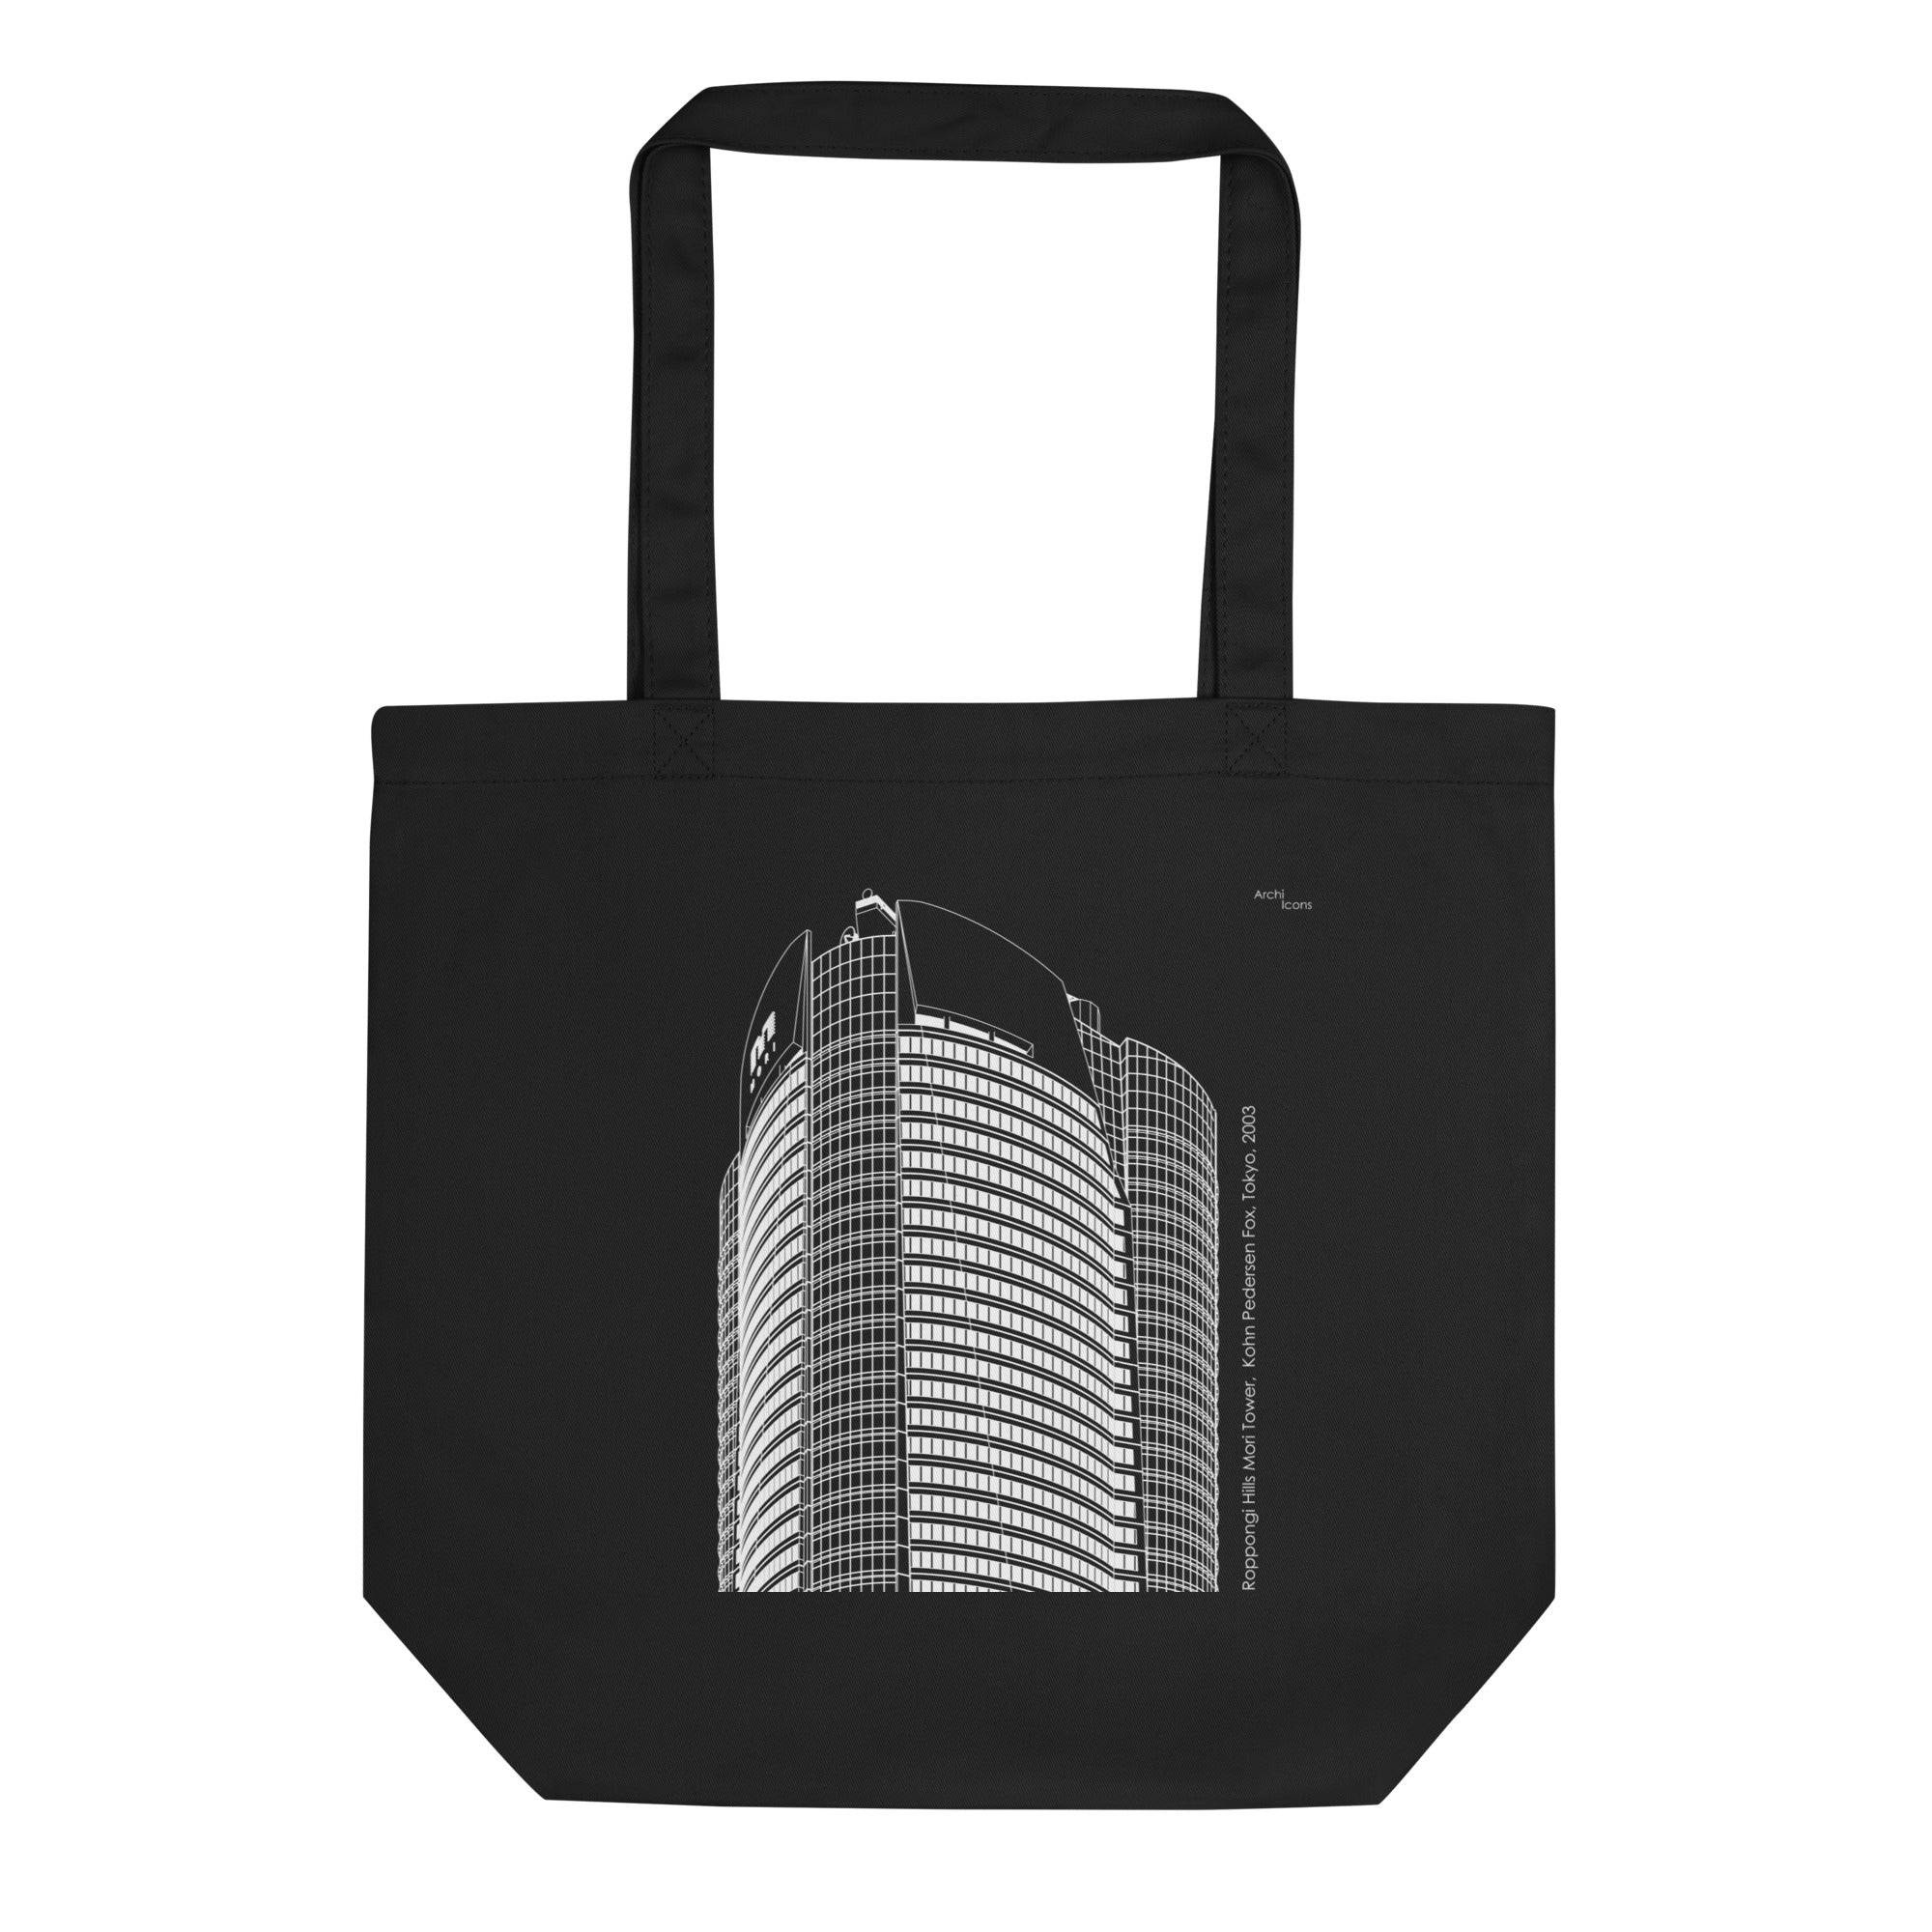 Roppongi Hills Mori Tower Eco Tote Bags